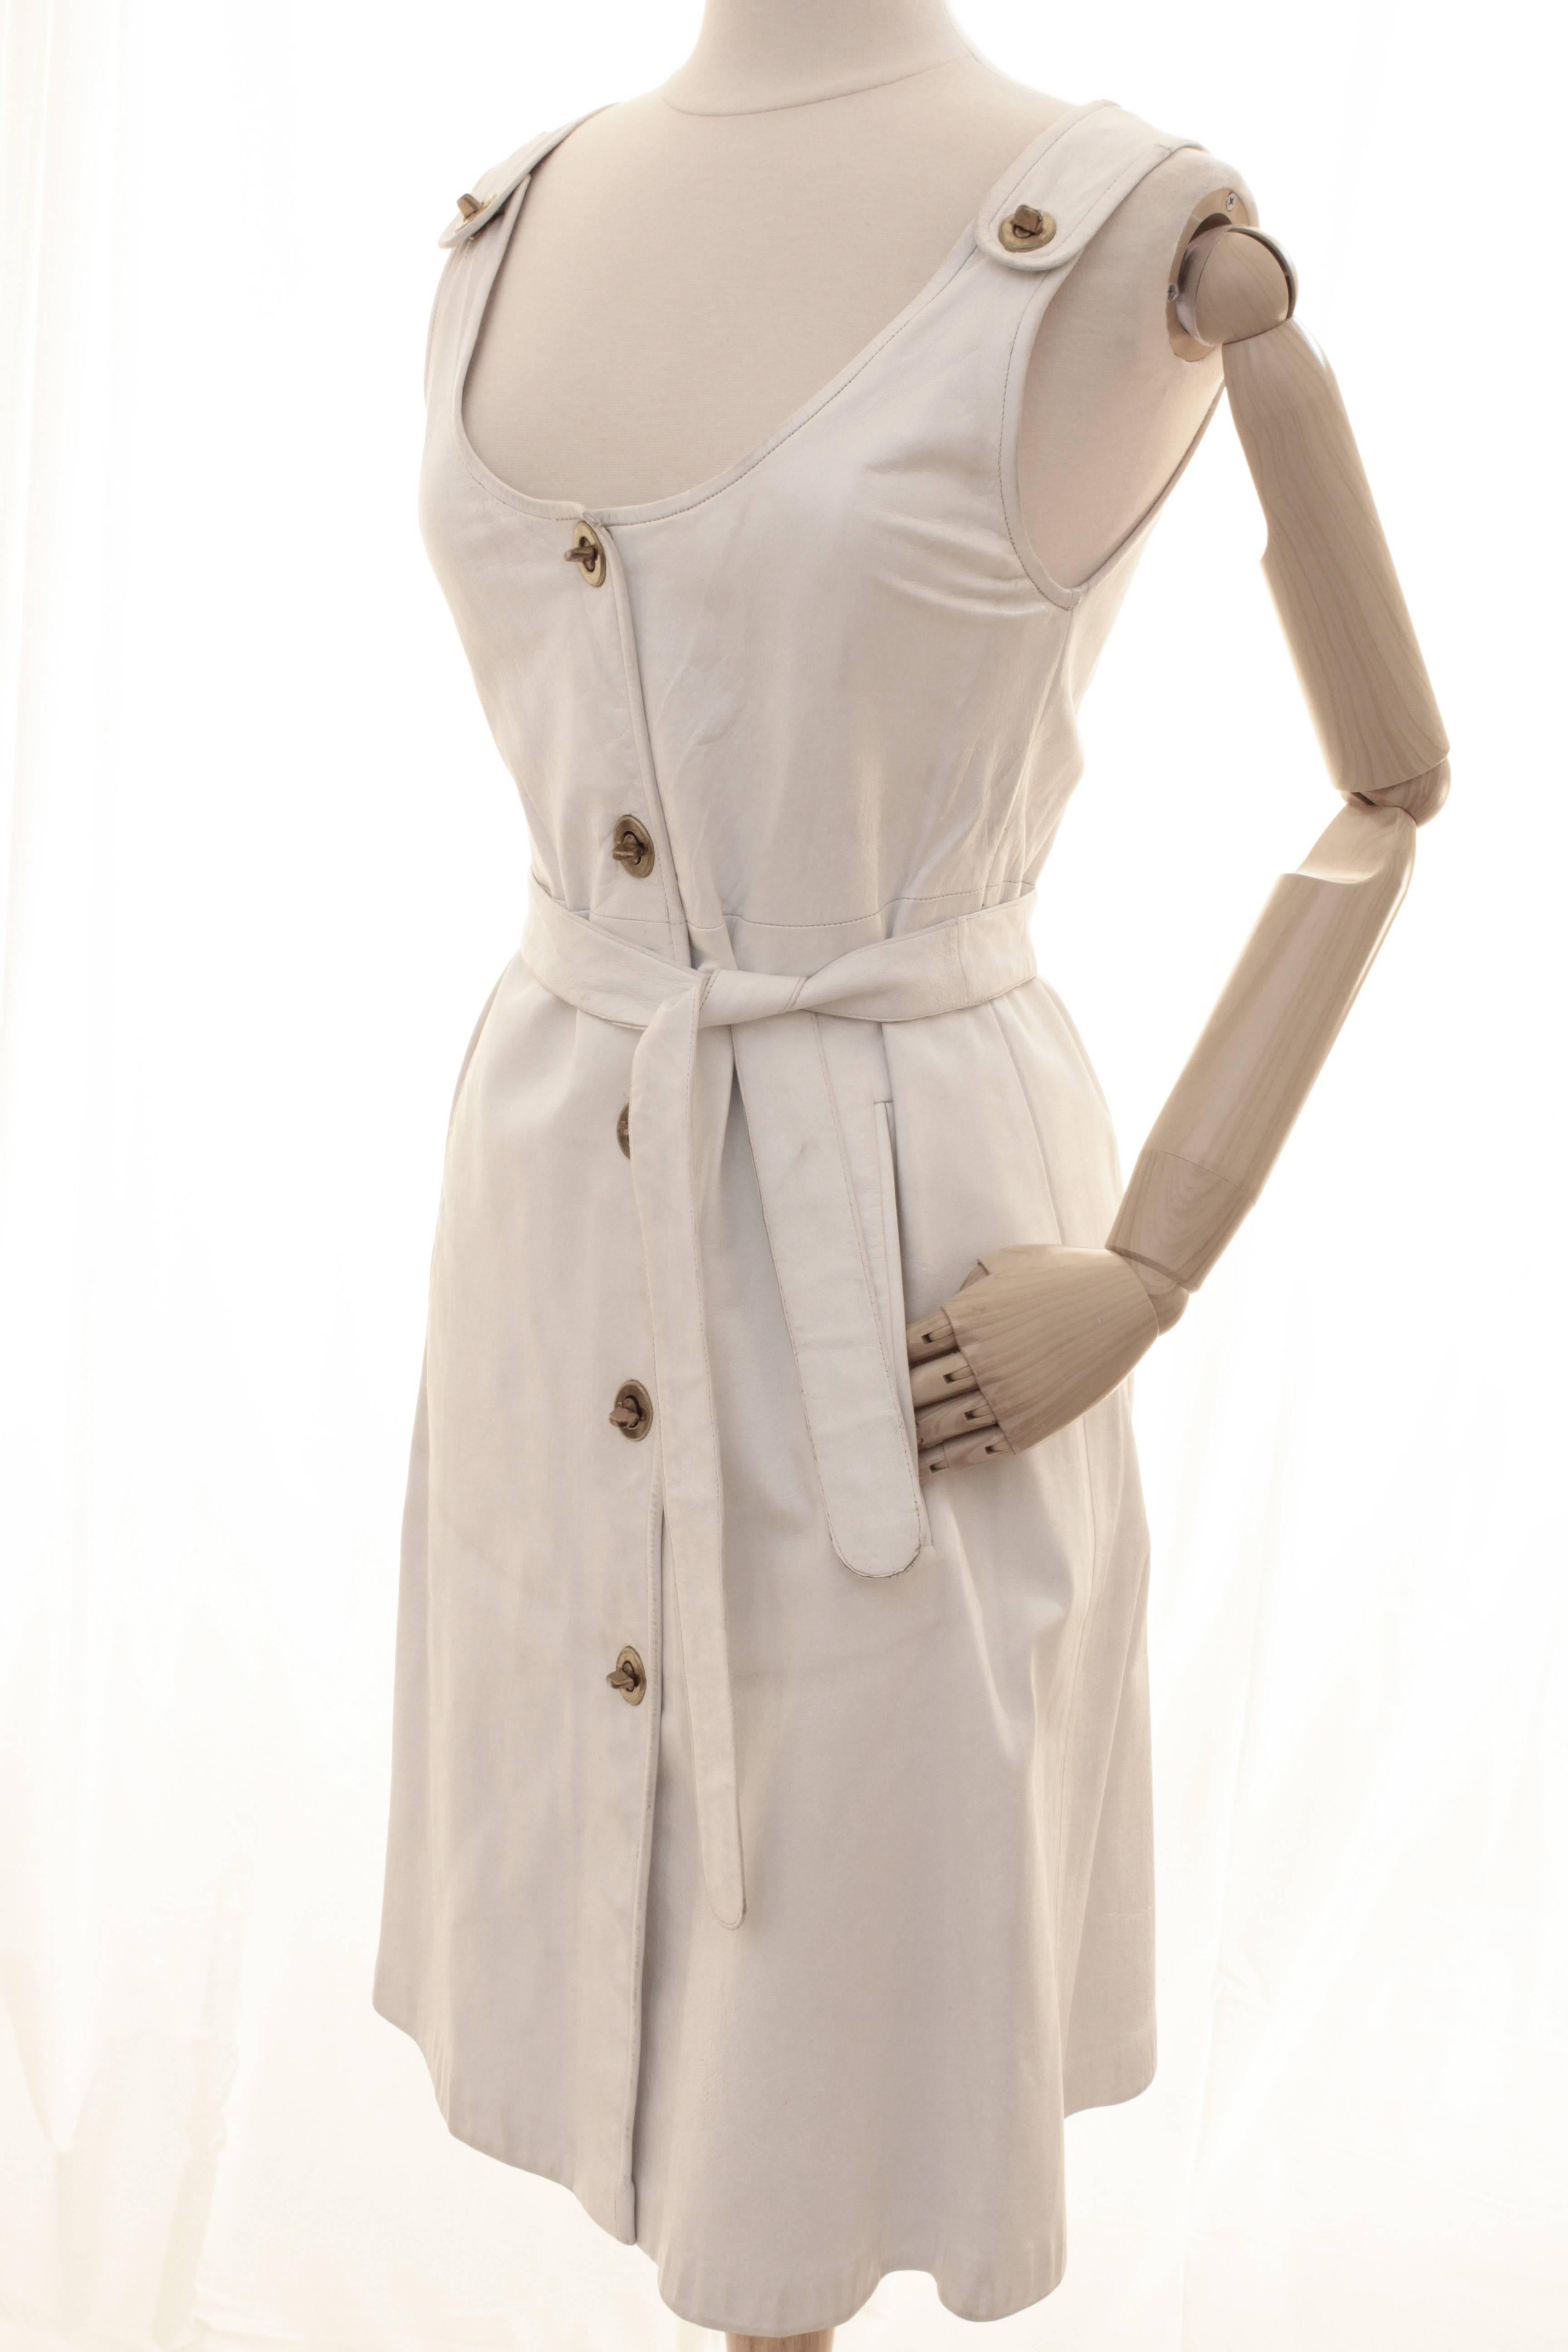 Mod Bonnie Cashin White Leather Mini Dress Set with Matching Belt & Gloves 60s M 1